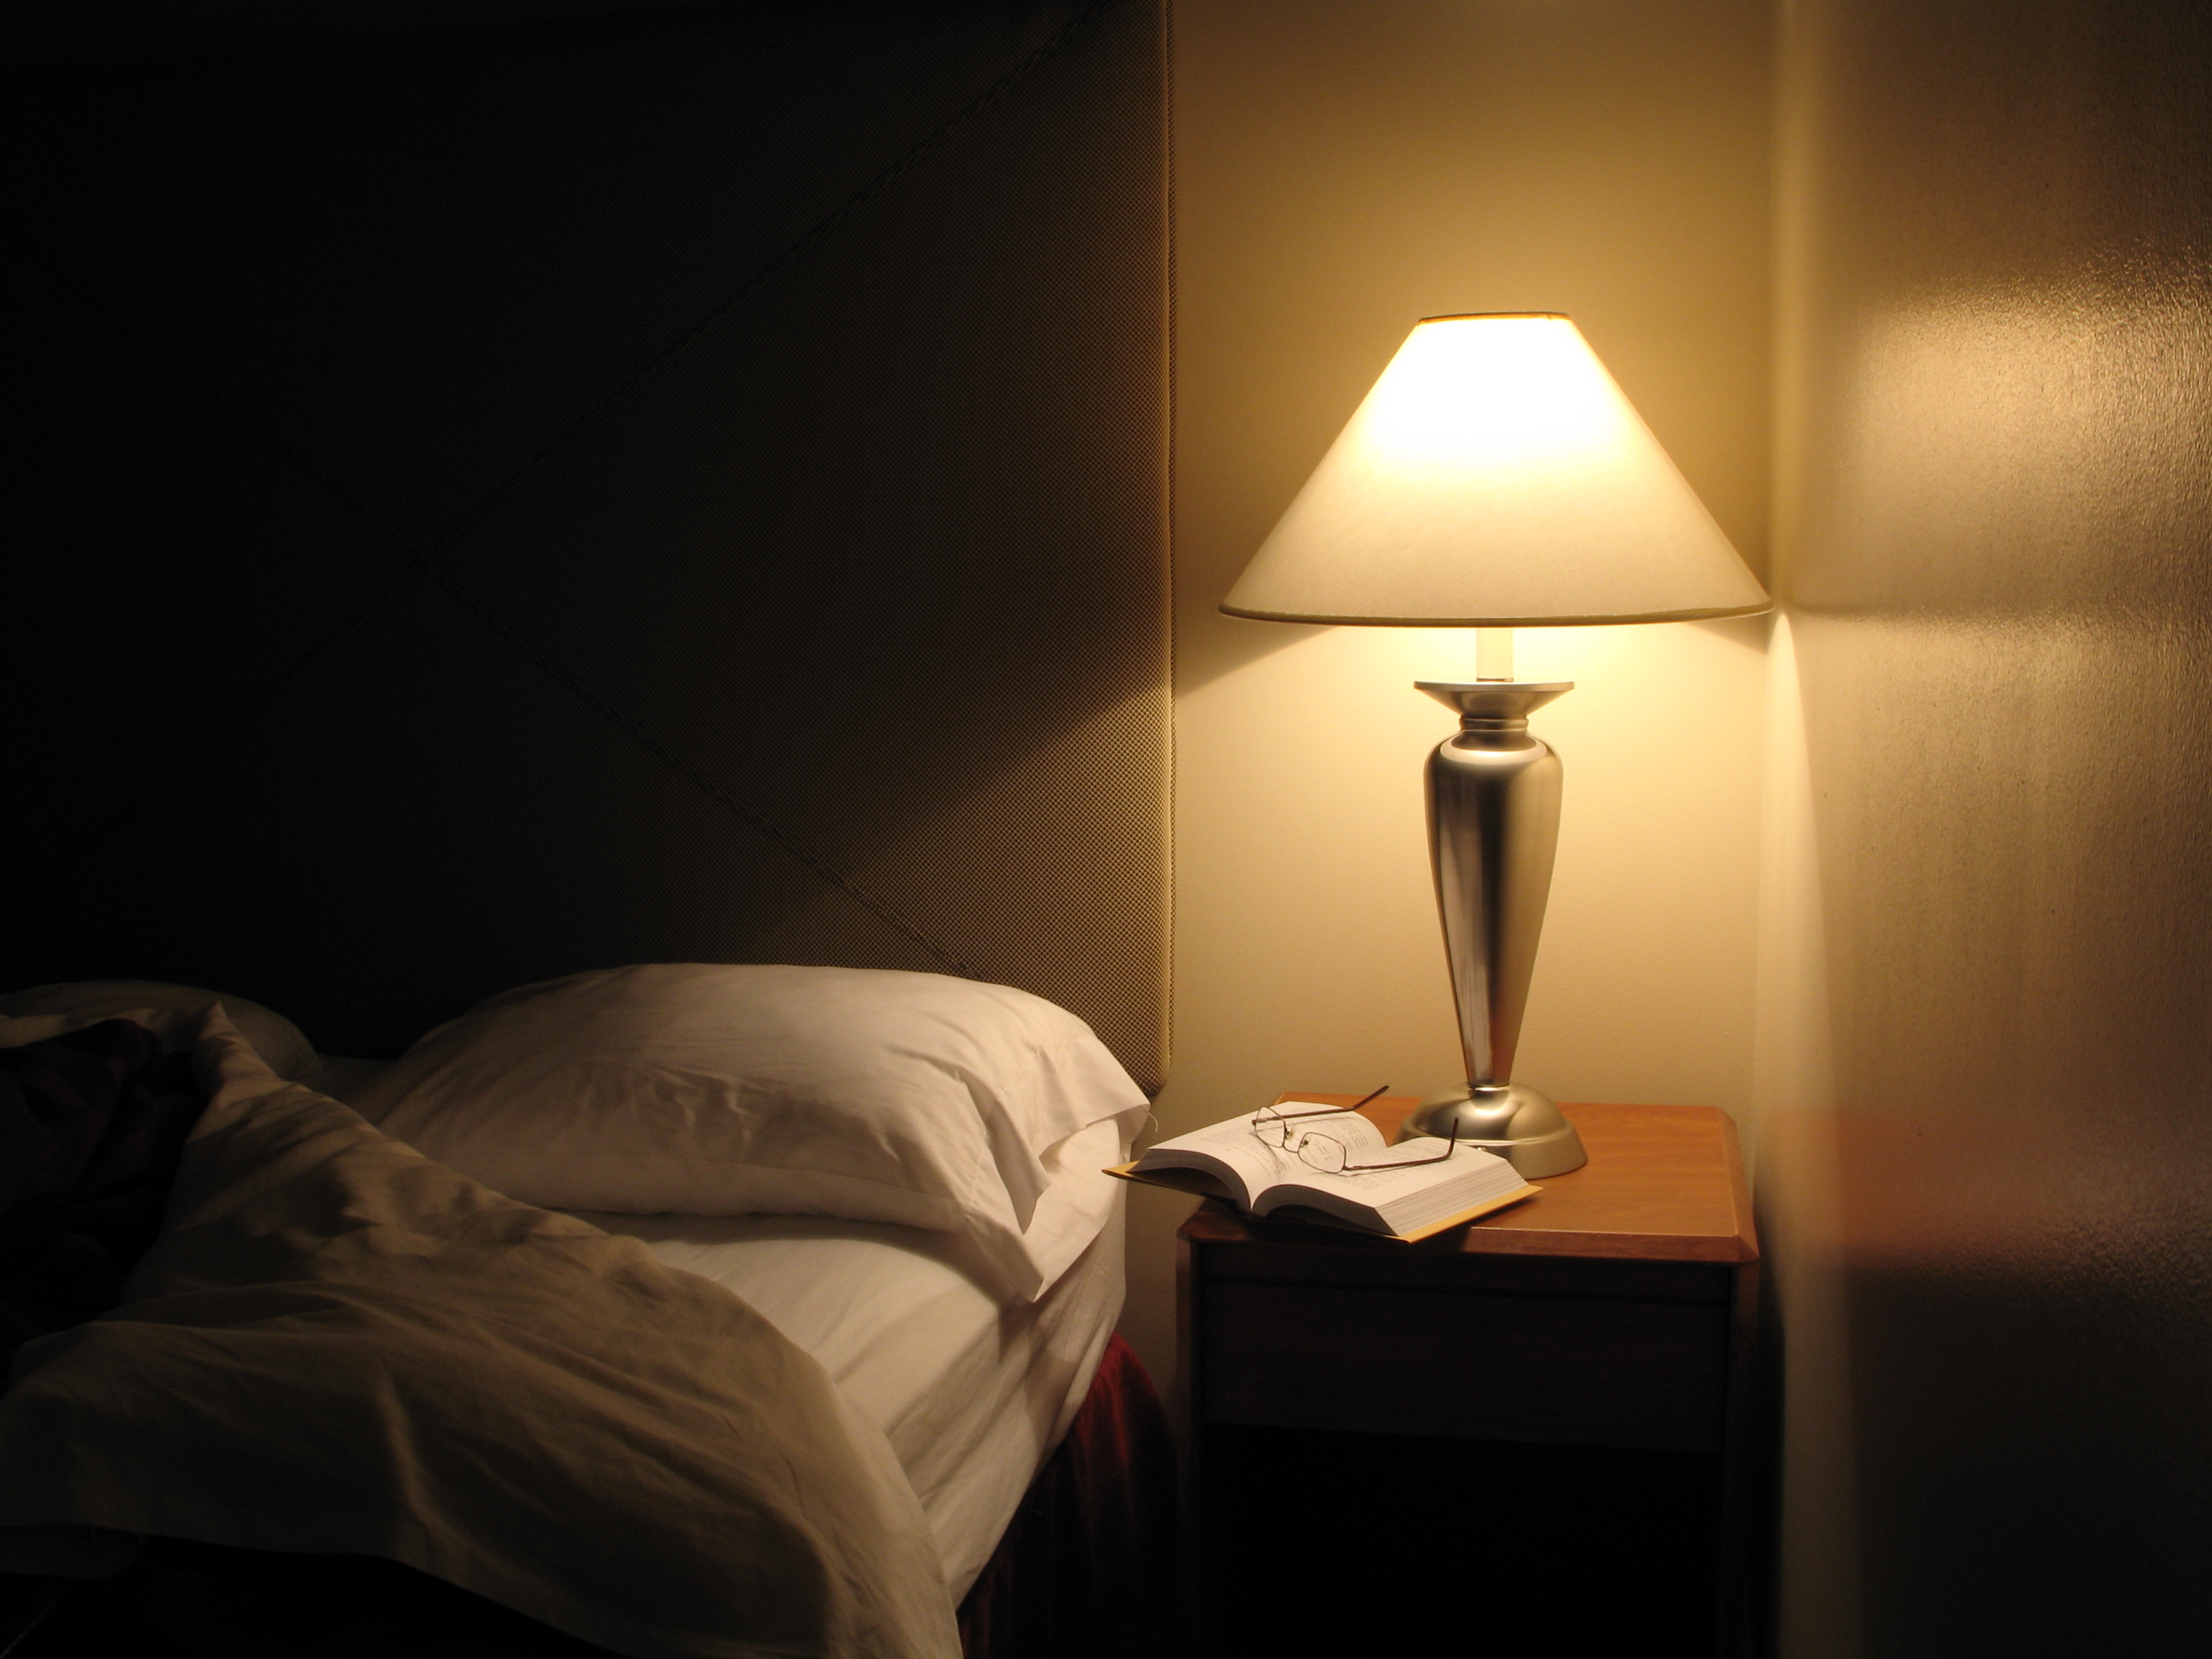 Включи свет красиво. Лампа в темноте. Приглушенный свет в комнате. Ночники в спальню. Приглушенный свет в спальне.